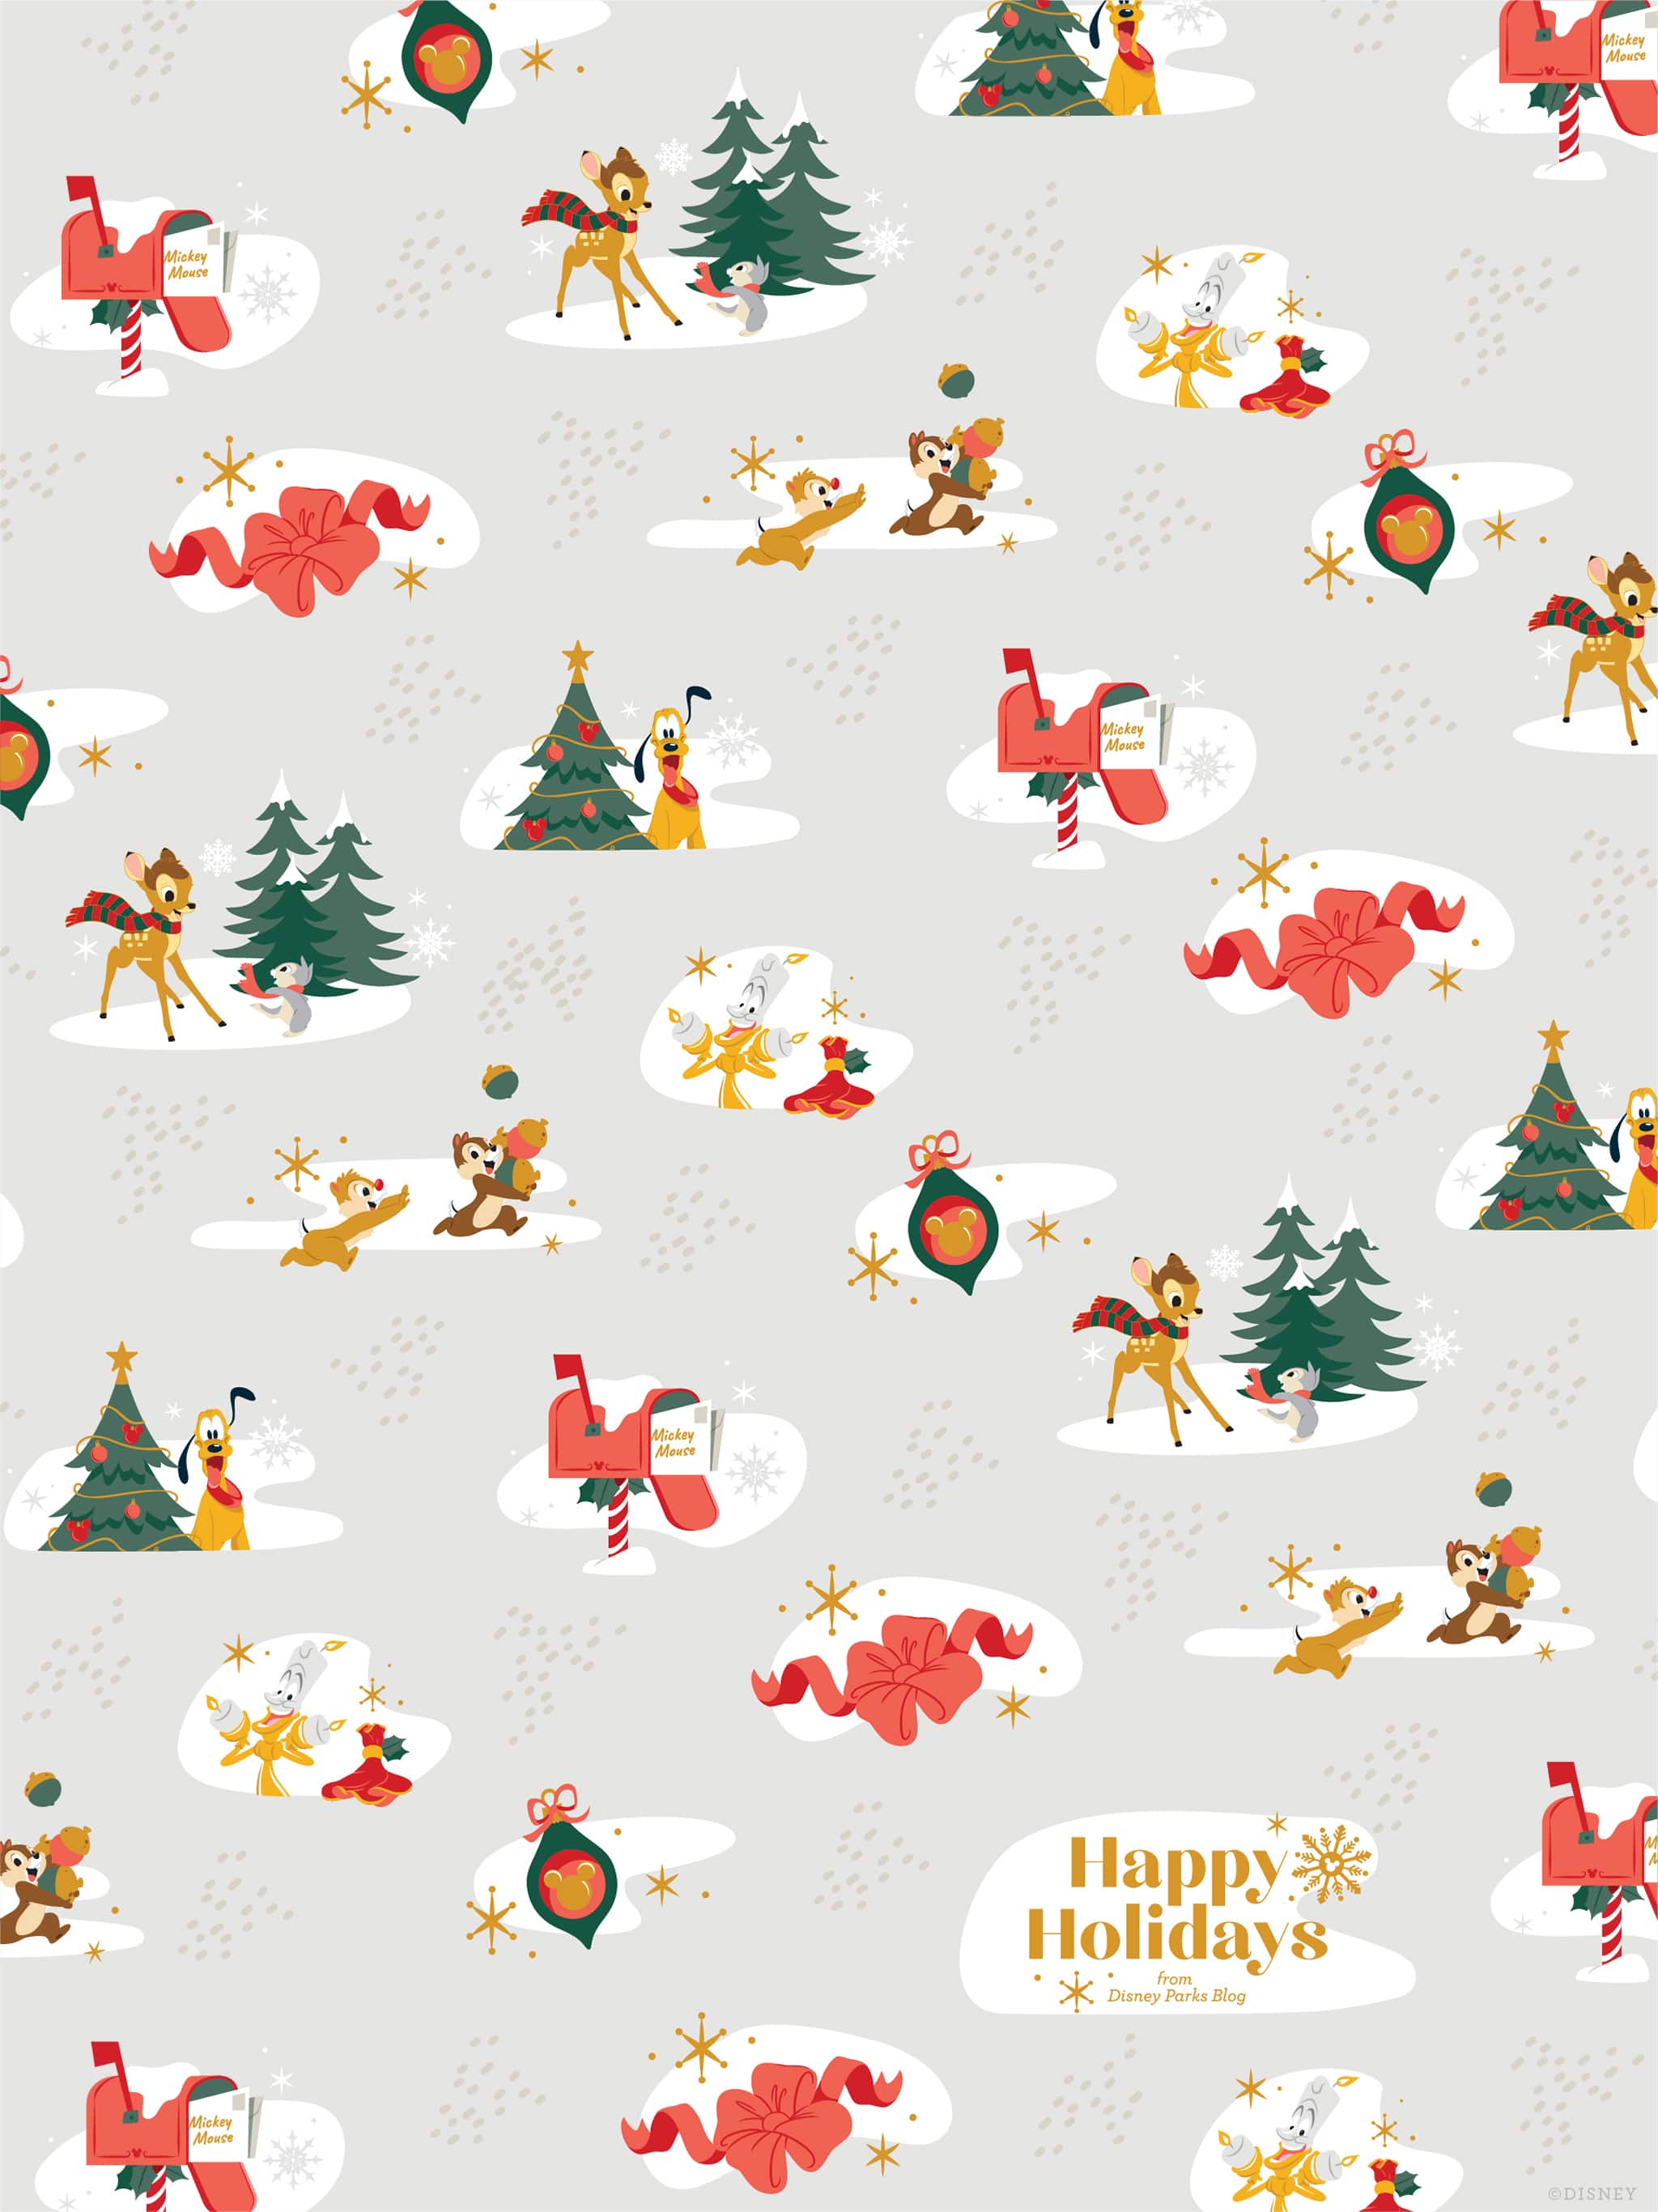 December 2016 Christmas Cookie Calendar Wallpaper  Sarah Hearts